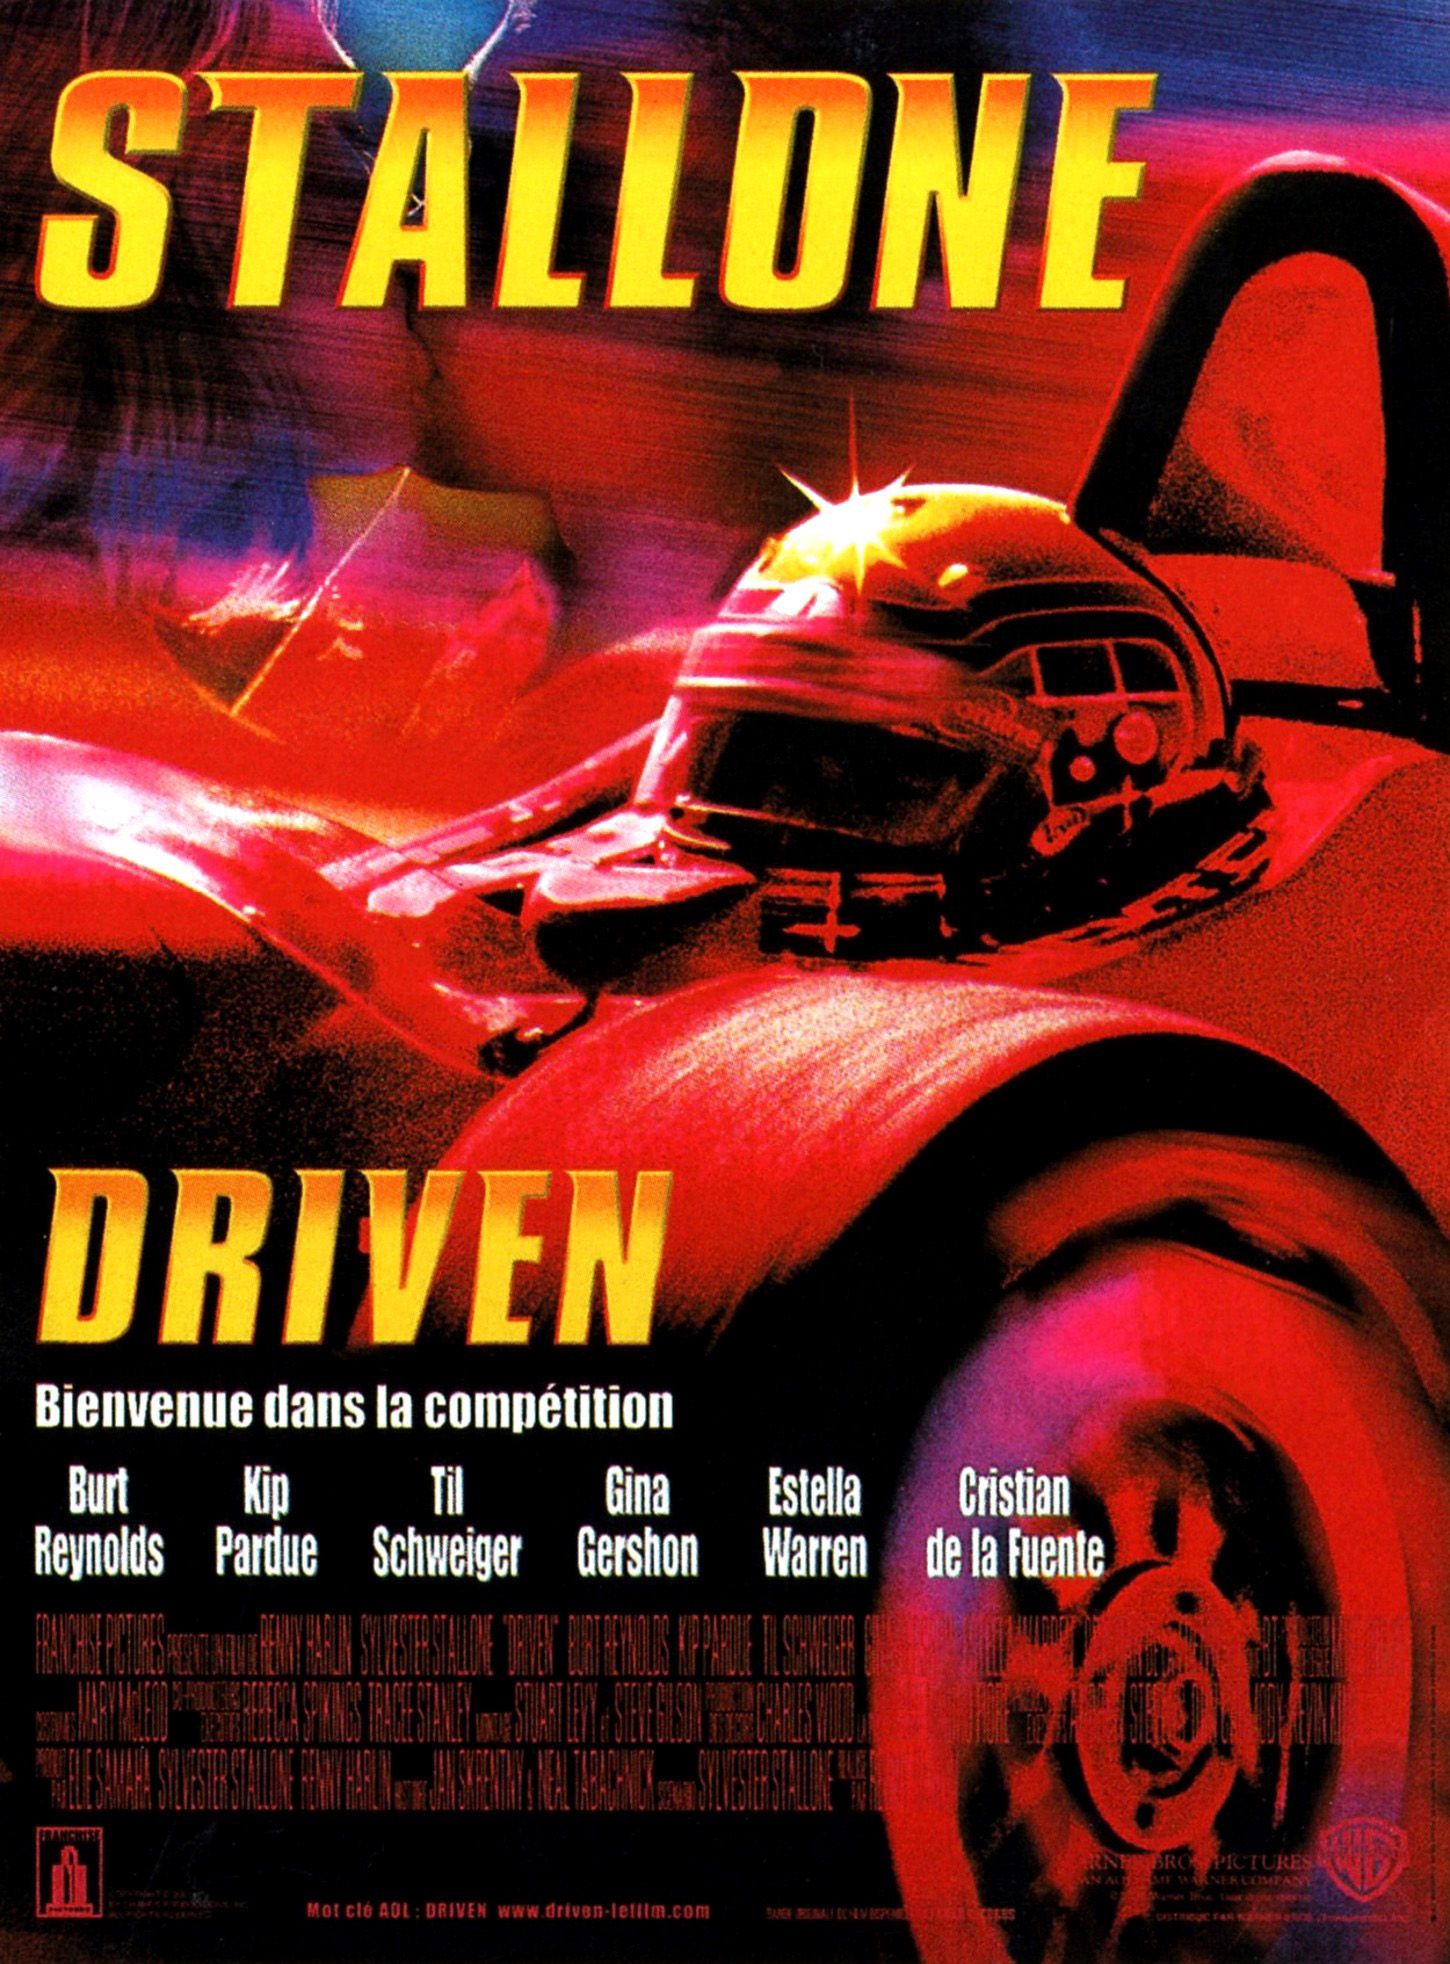 2001 Driven